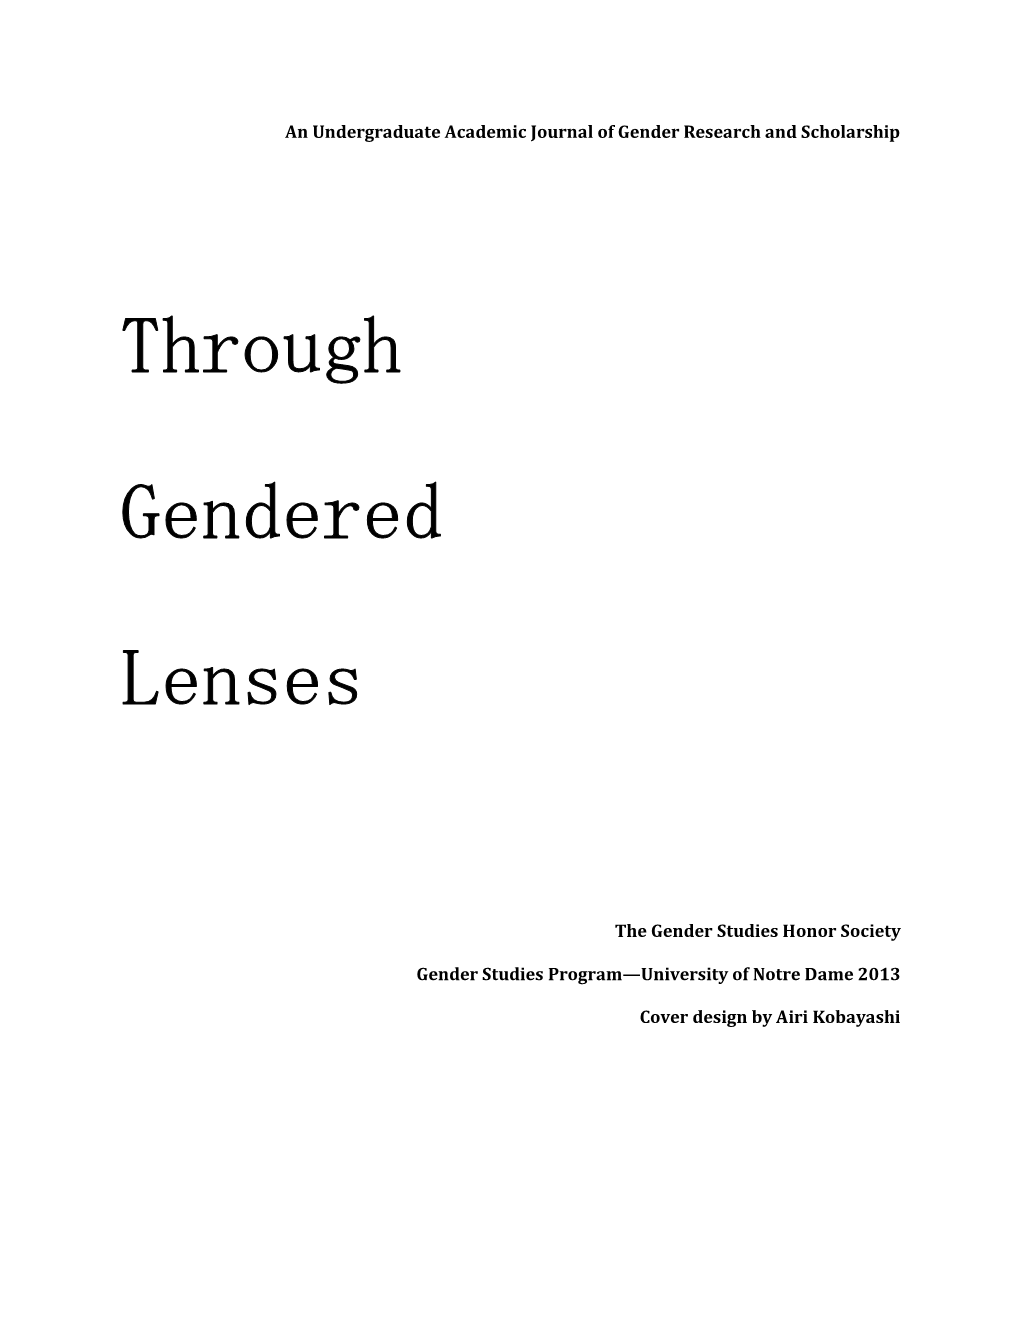 Through Gendered Lenses